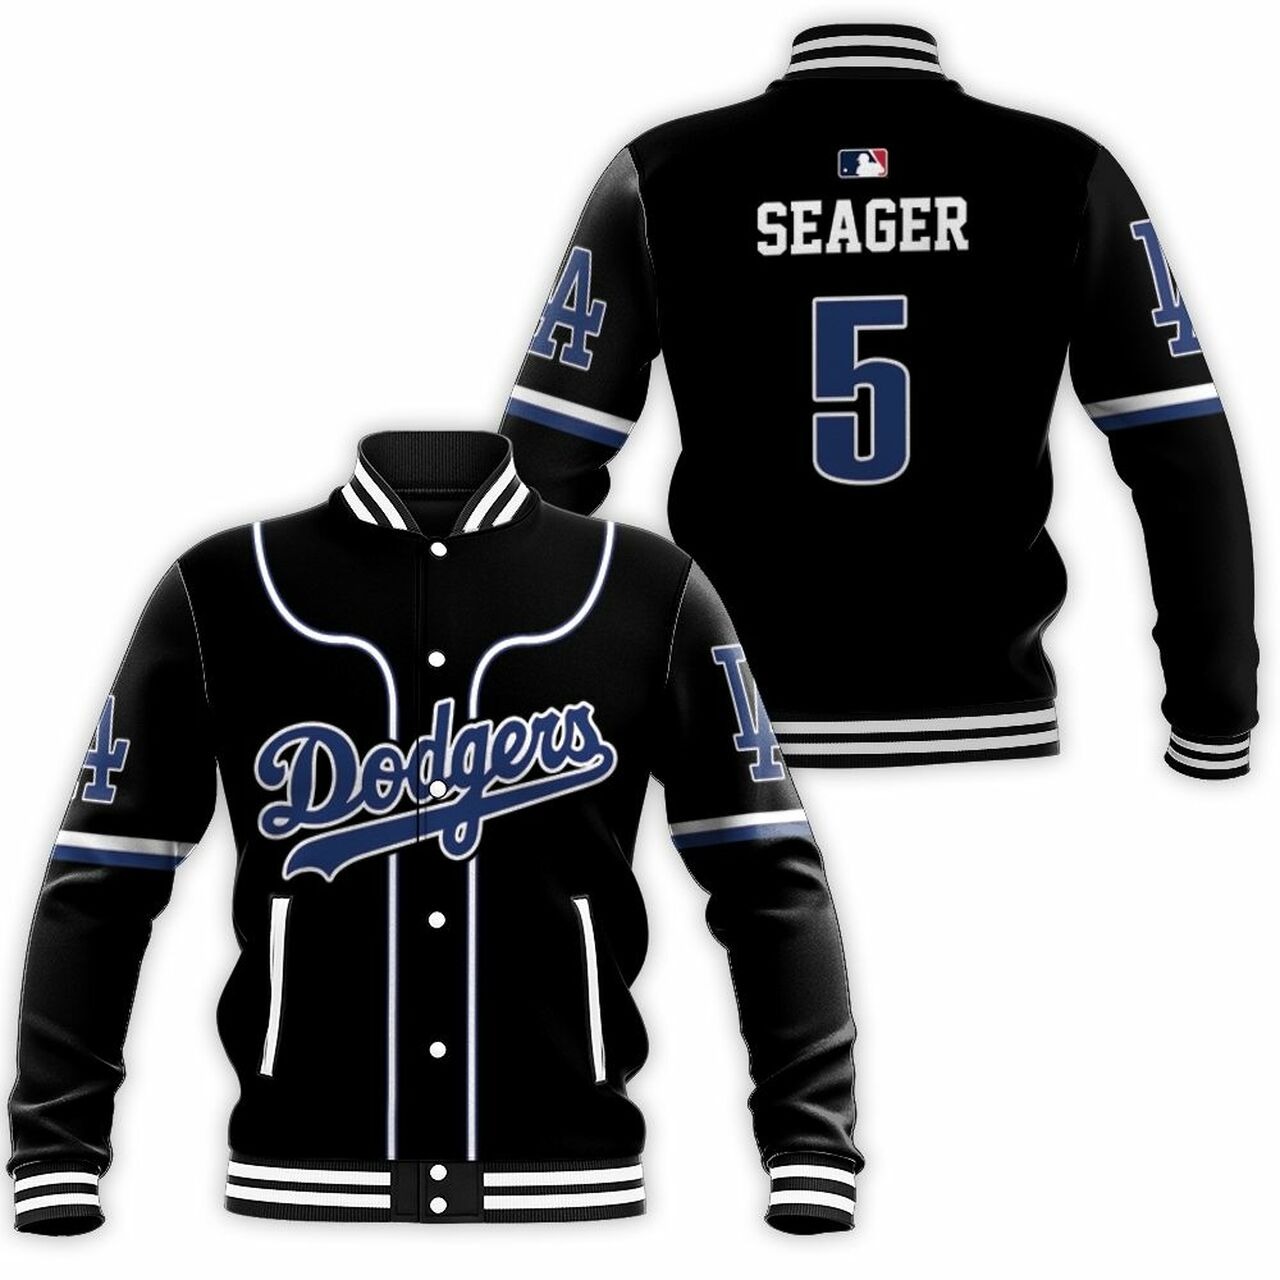 Los Angeles Dodgers Corey Seager 5 Mlb 2020 Black Baseball Jacket